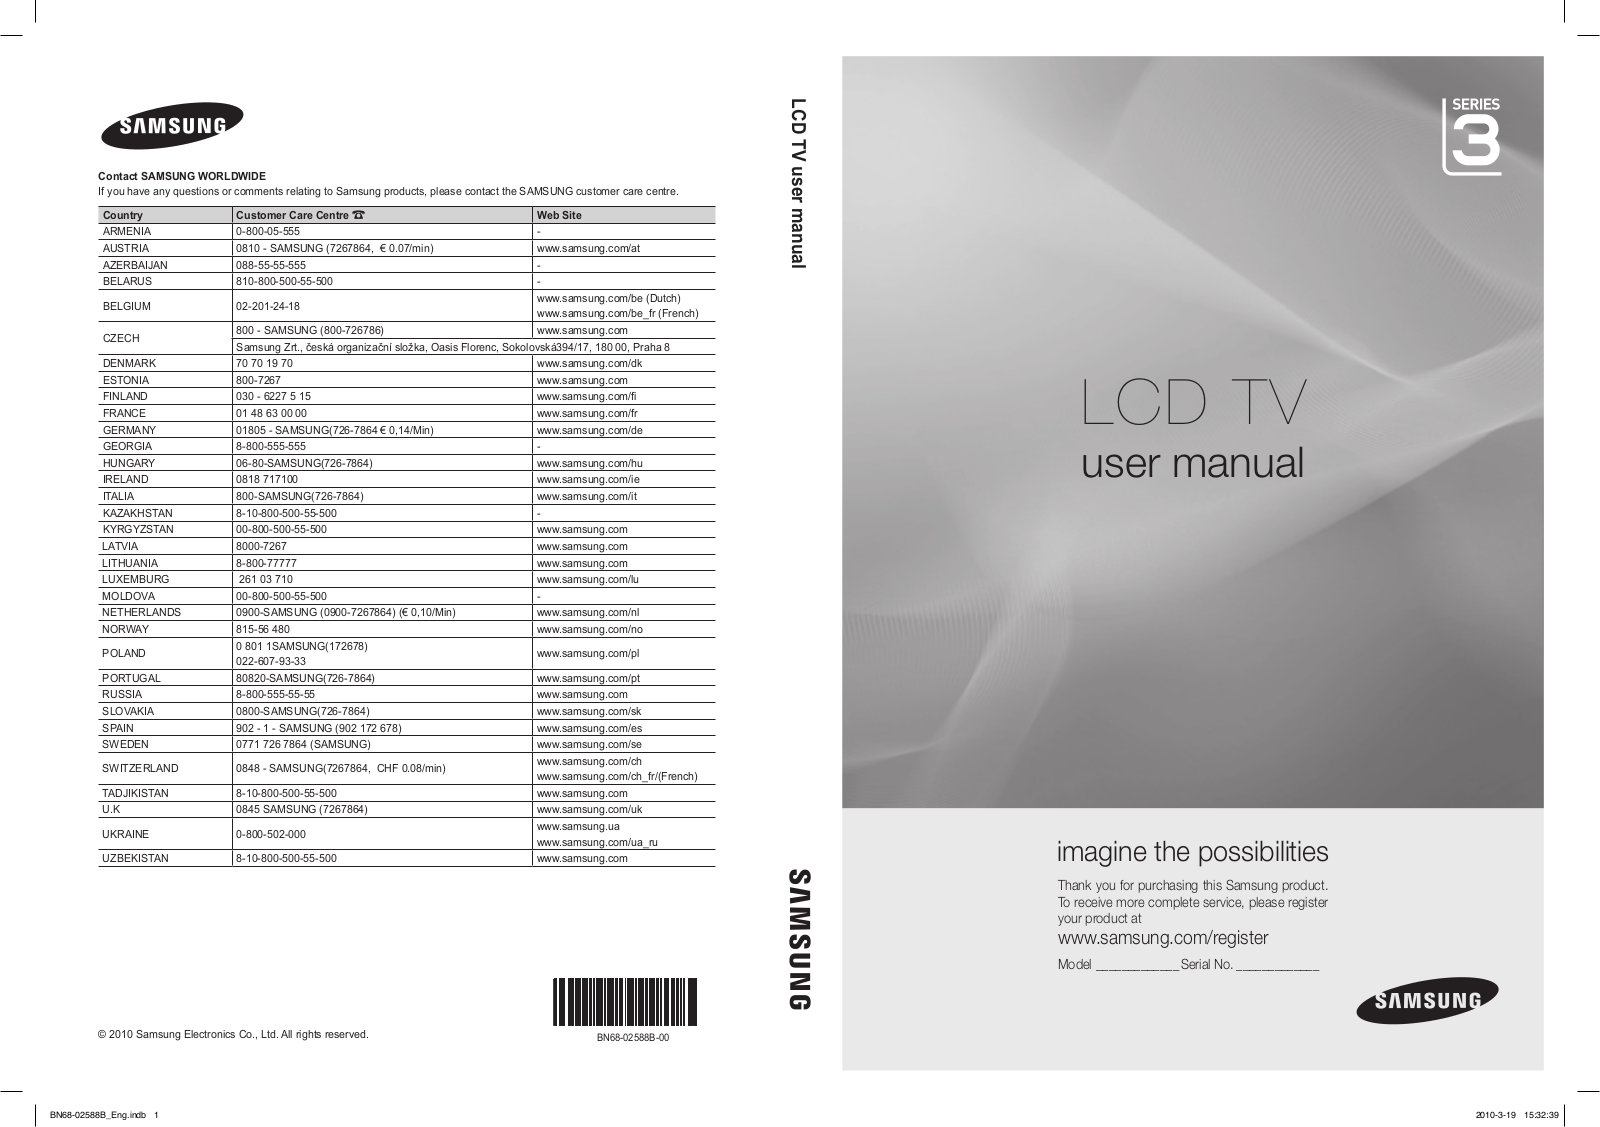 Samsung LCD TV user manual